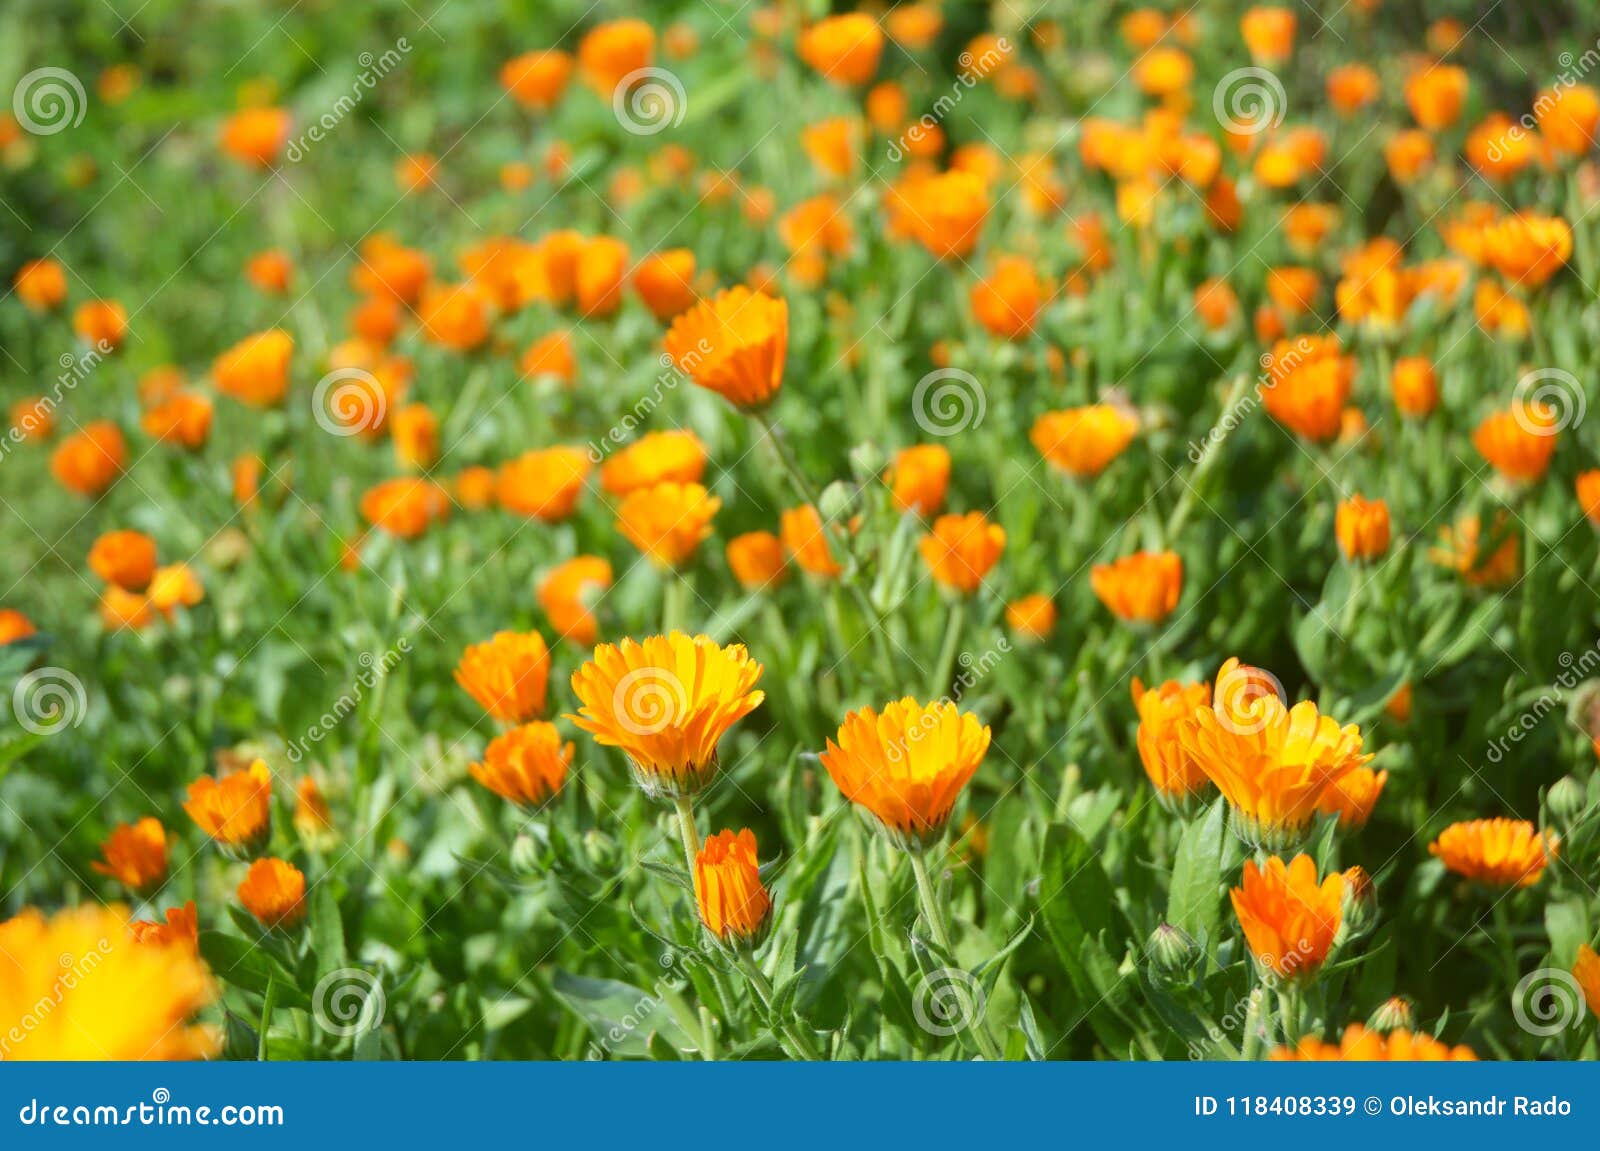 calendula officinalis or pot marigold, common marigold, scotch marigold, ruddles, pot marigold.